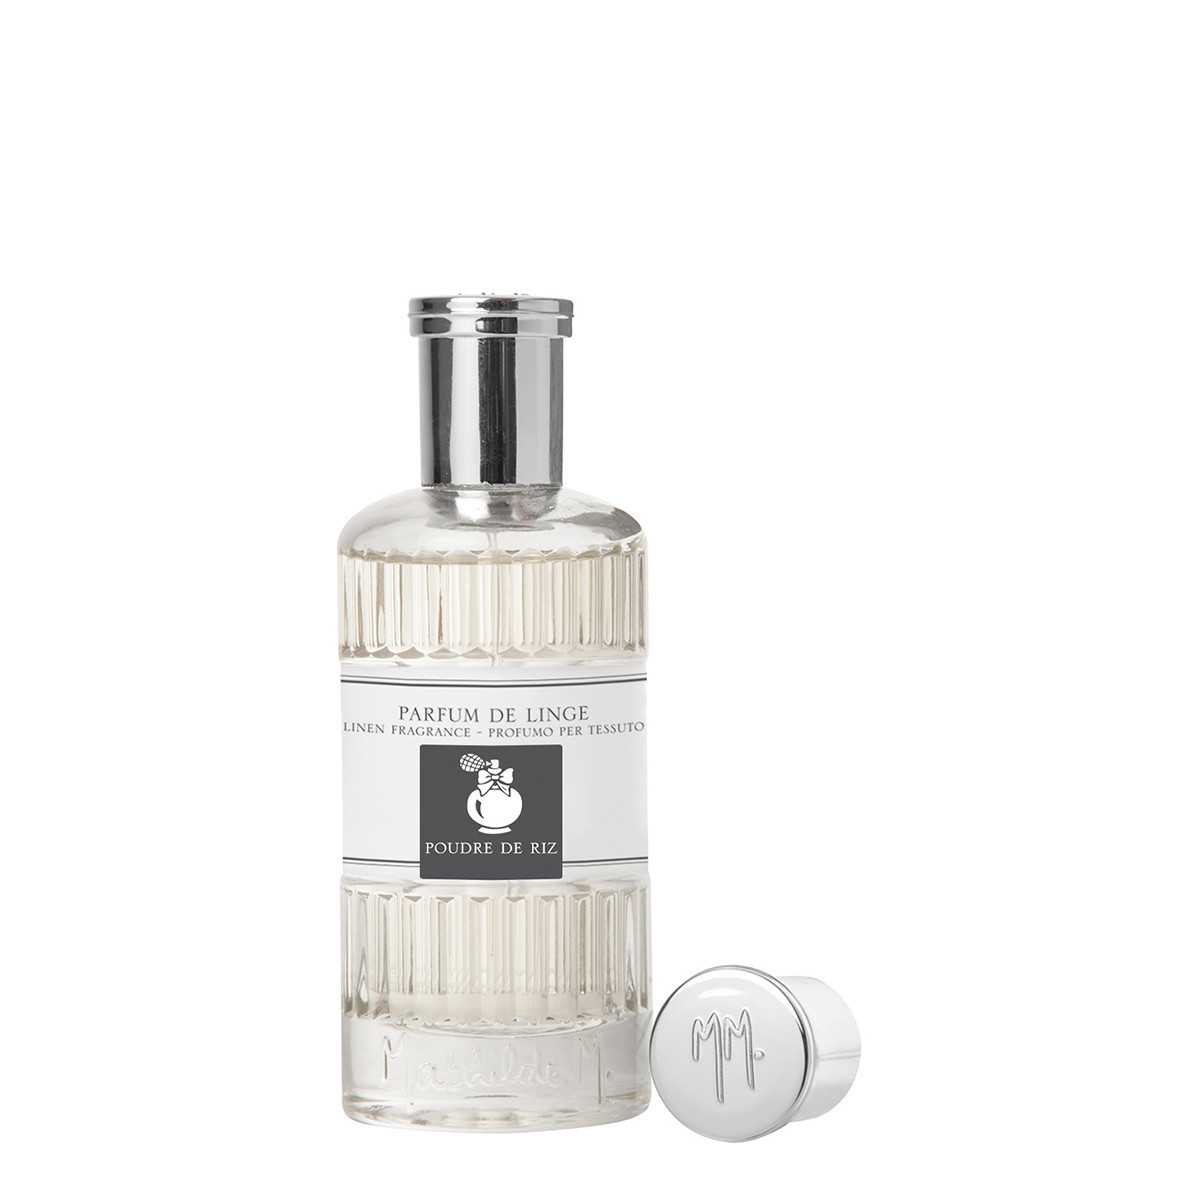 Linen perfume 75 ml - Rice powder